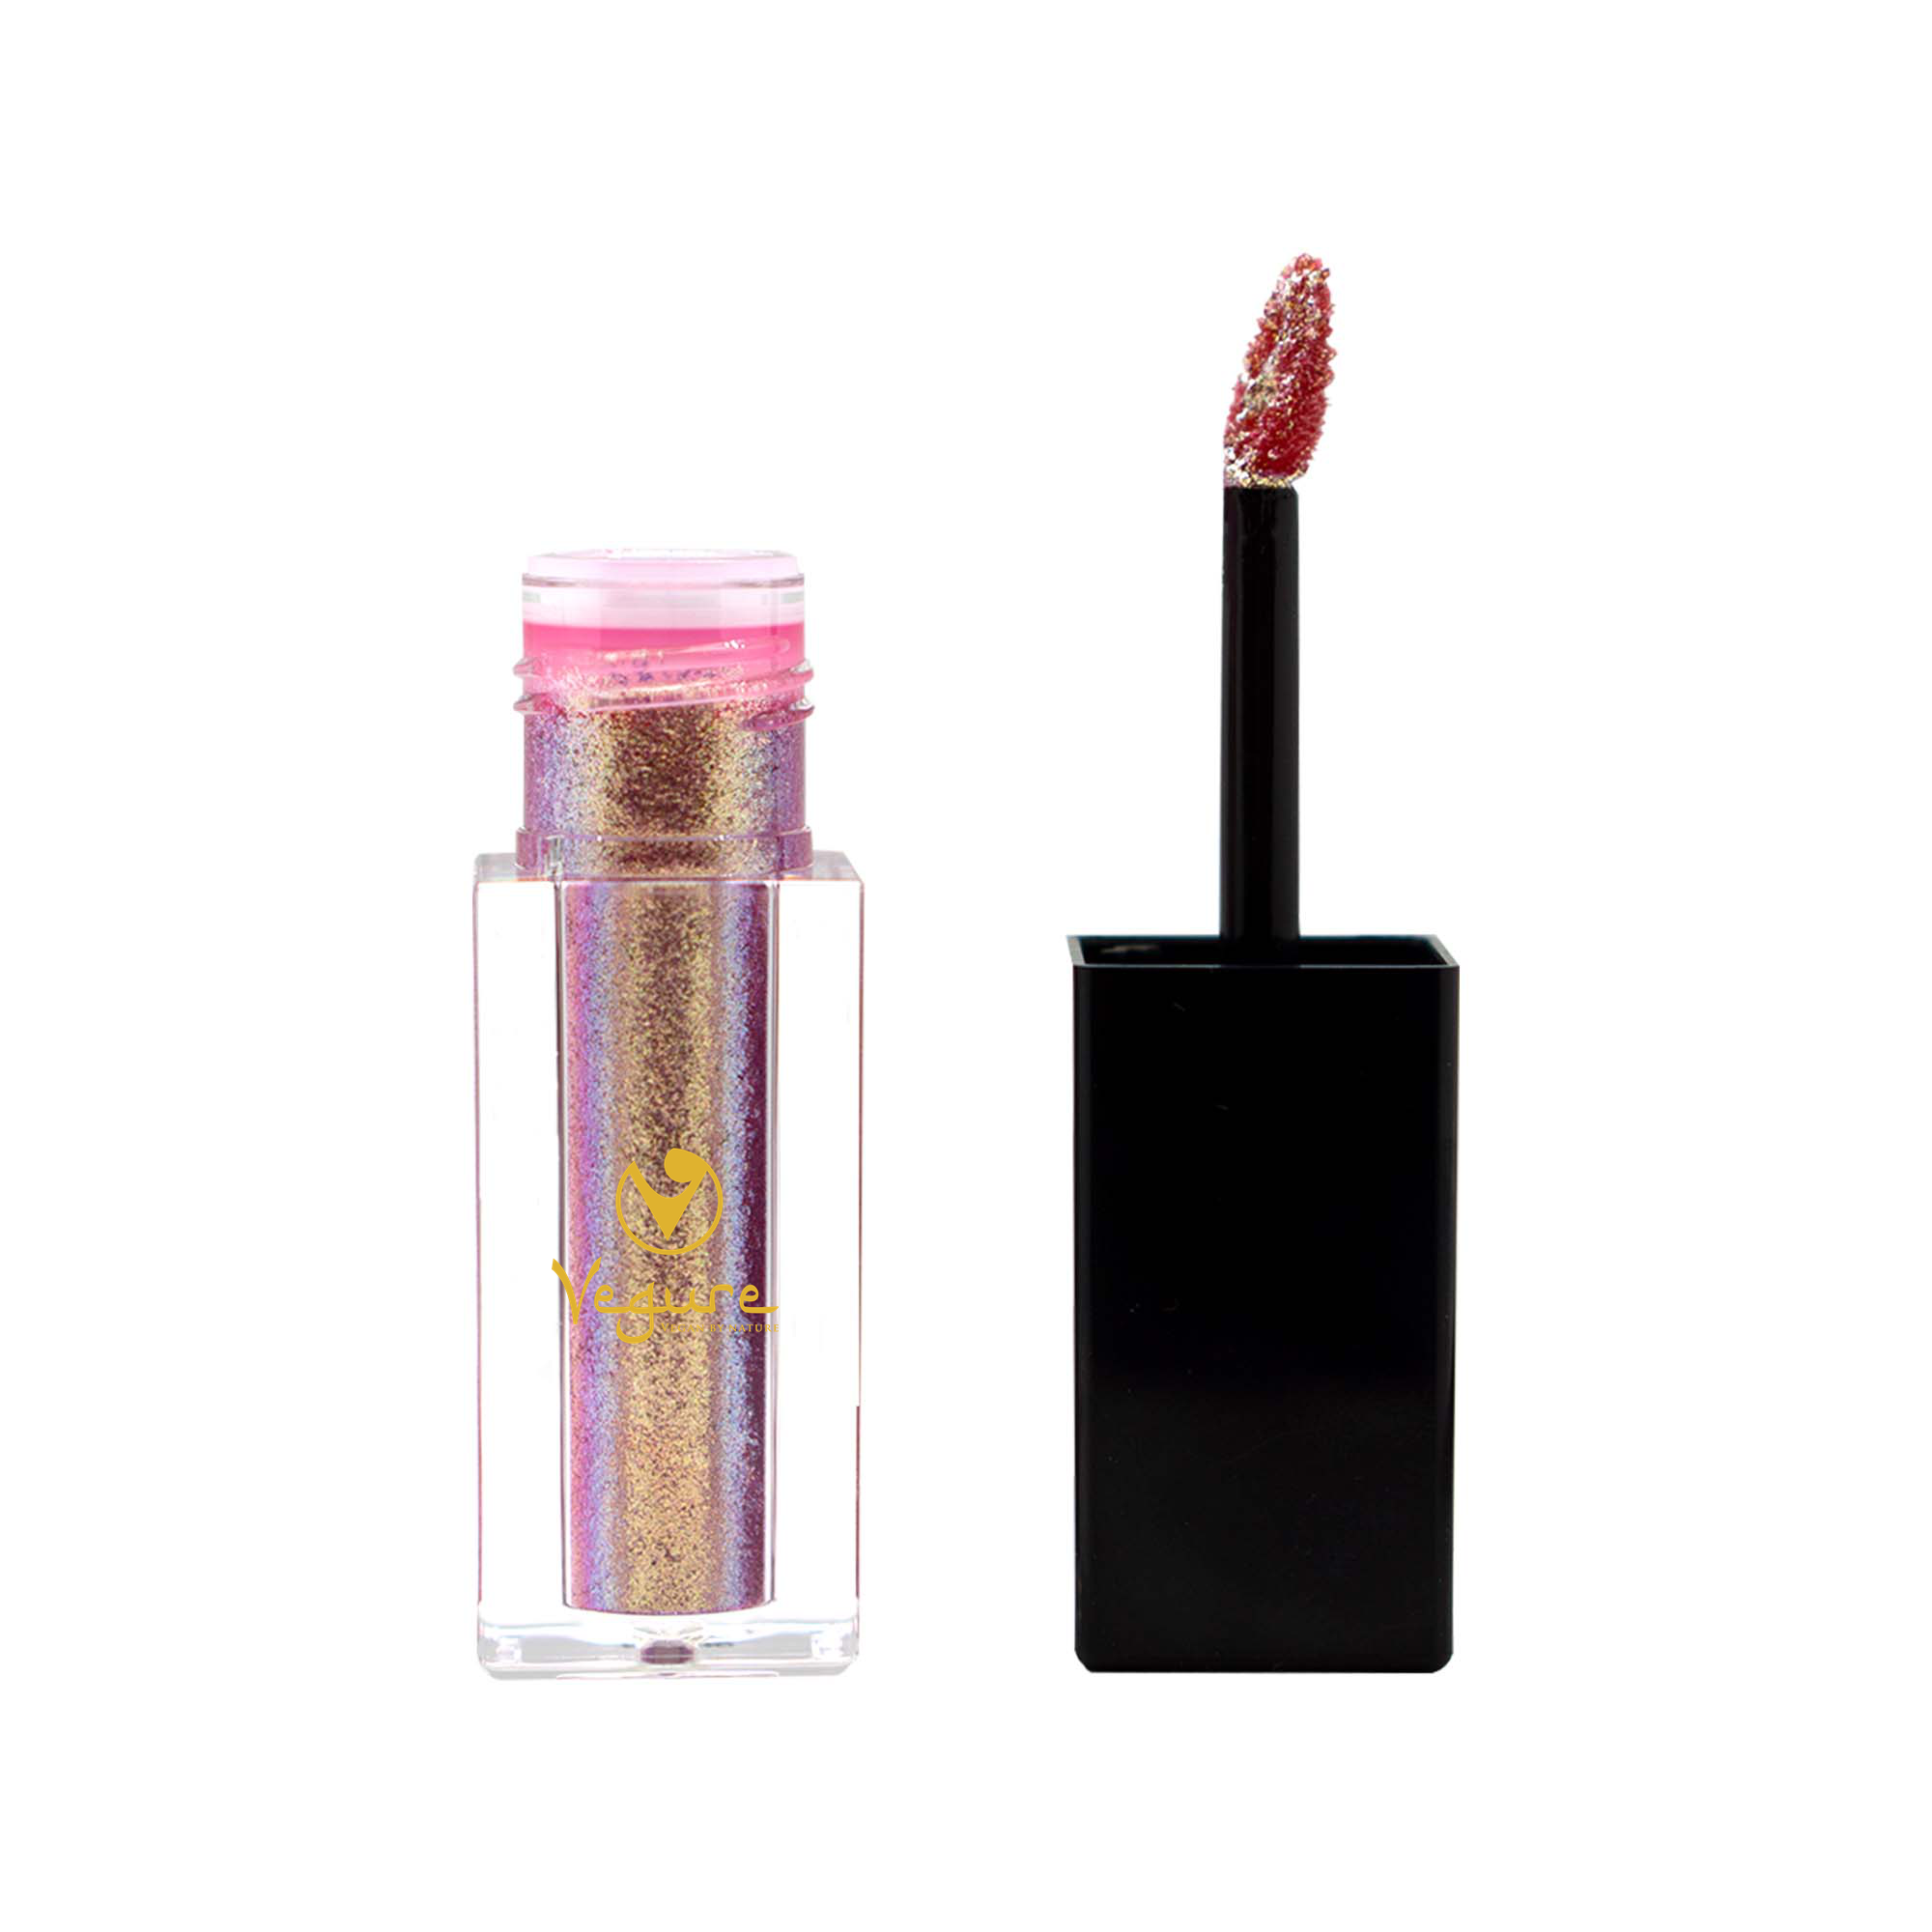 Liquid Shimmer - Hottie : eyeshadows, highlighters, and lipsticks use